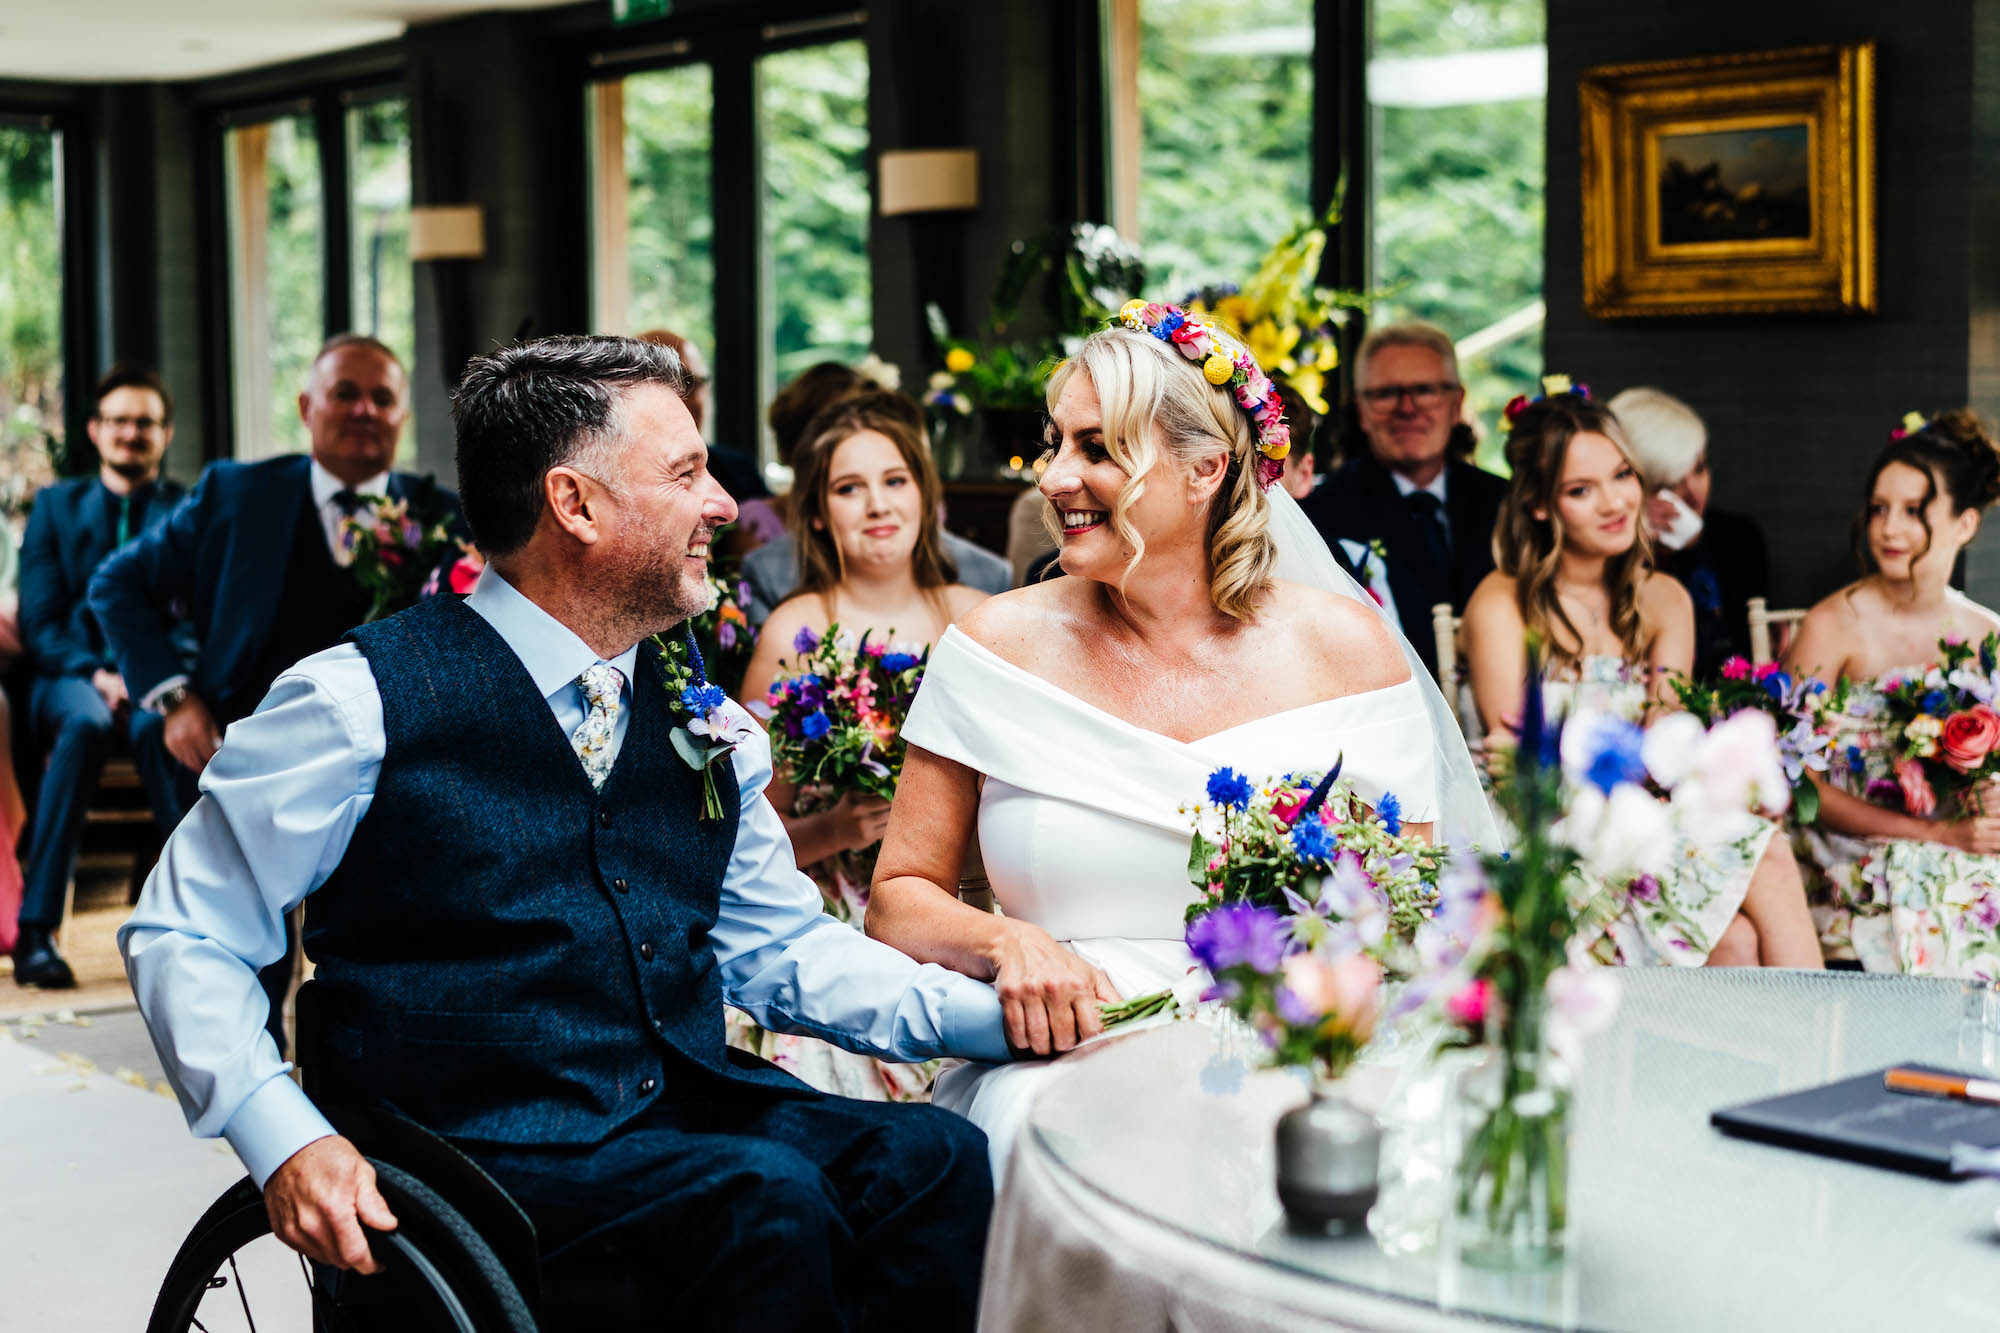 Joyful photo of a bride and groom at their wedding - by Hannah Hall Photography